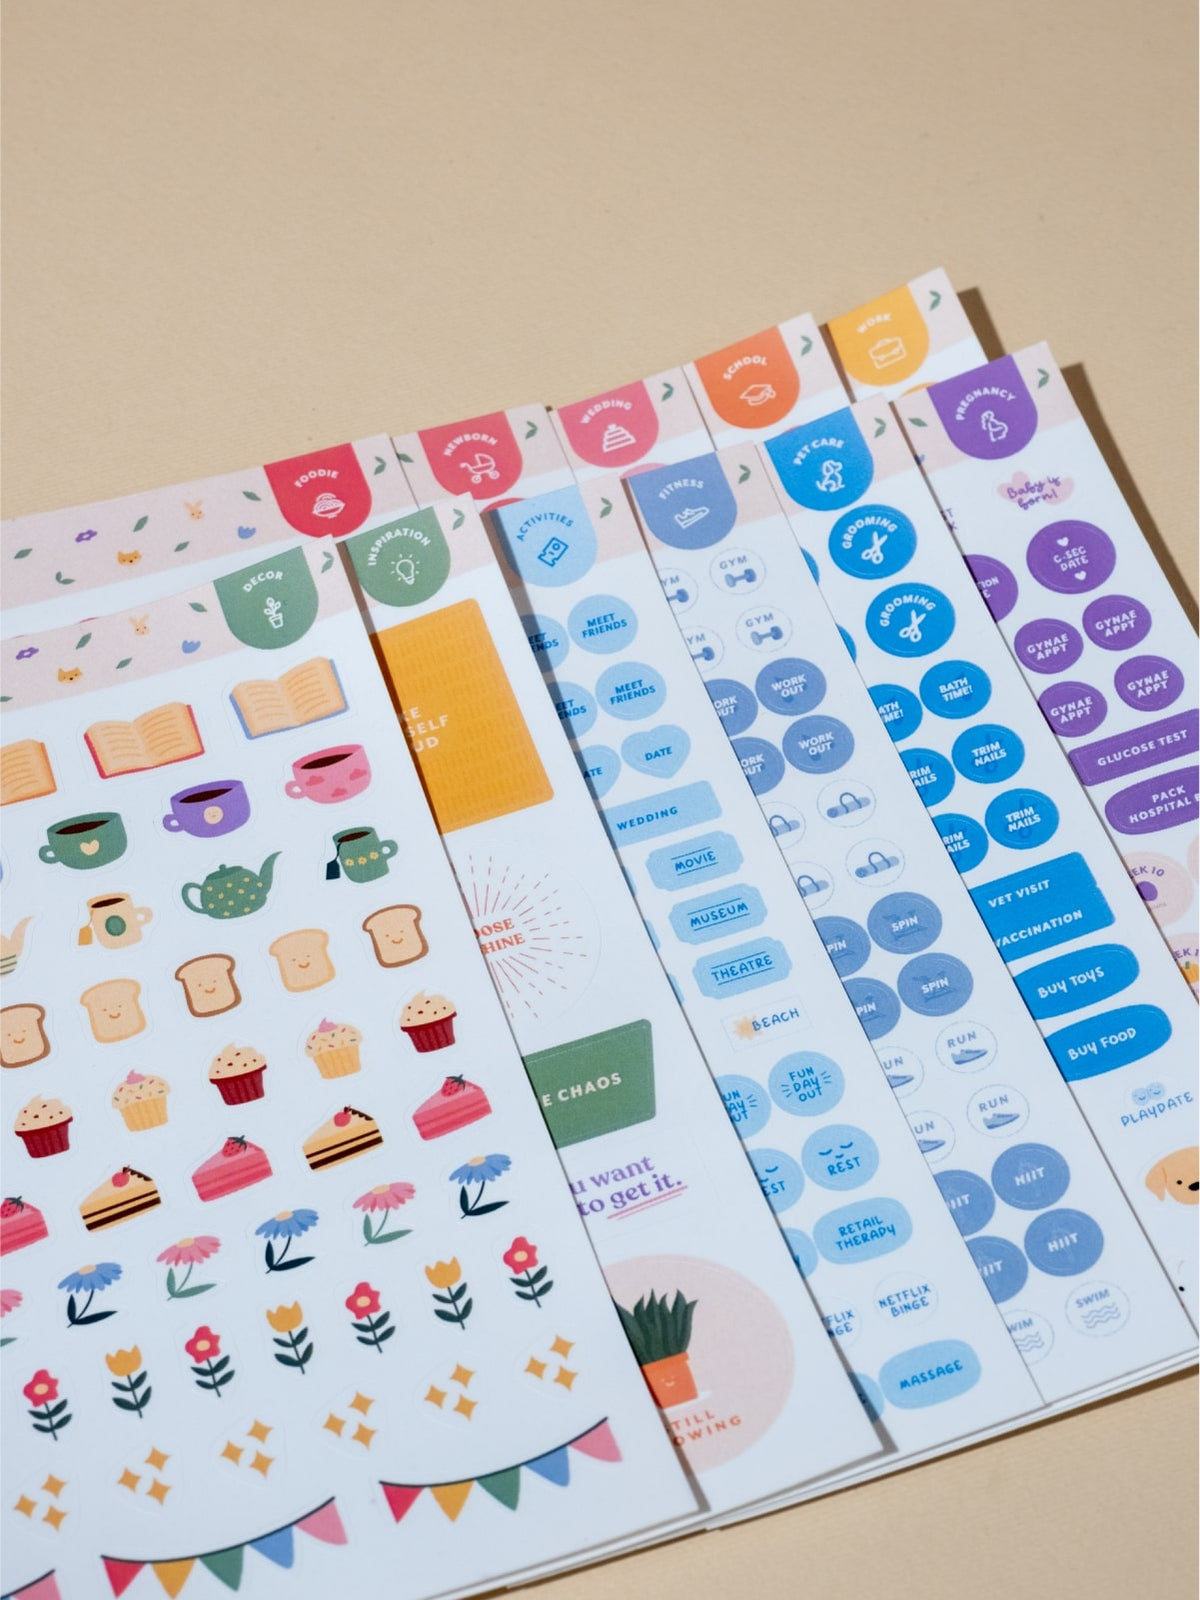 Wedding Planning - Colour-coded Planner Sticker Sheet